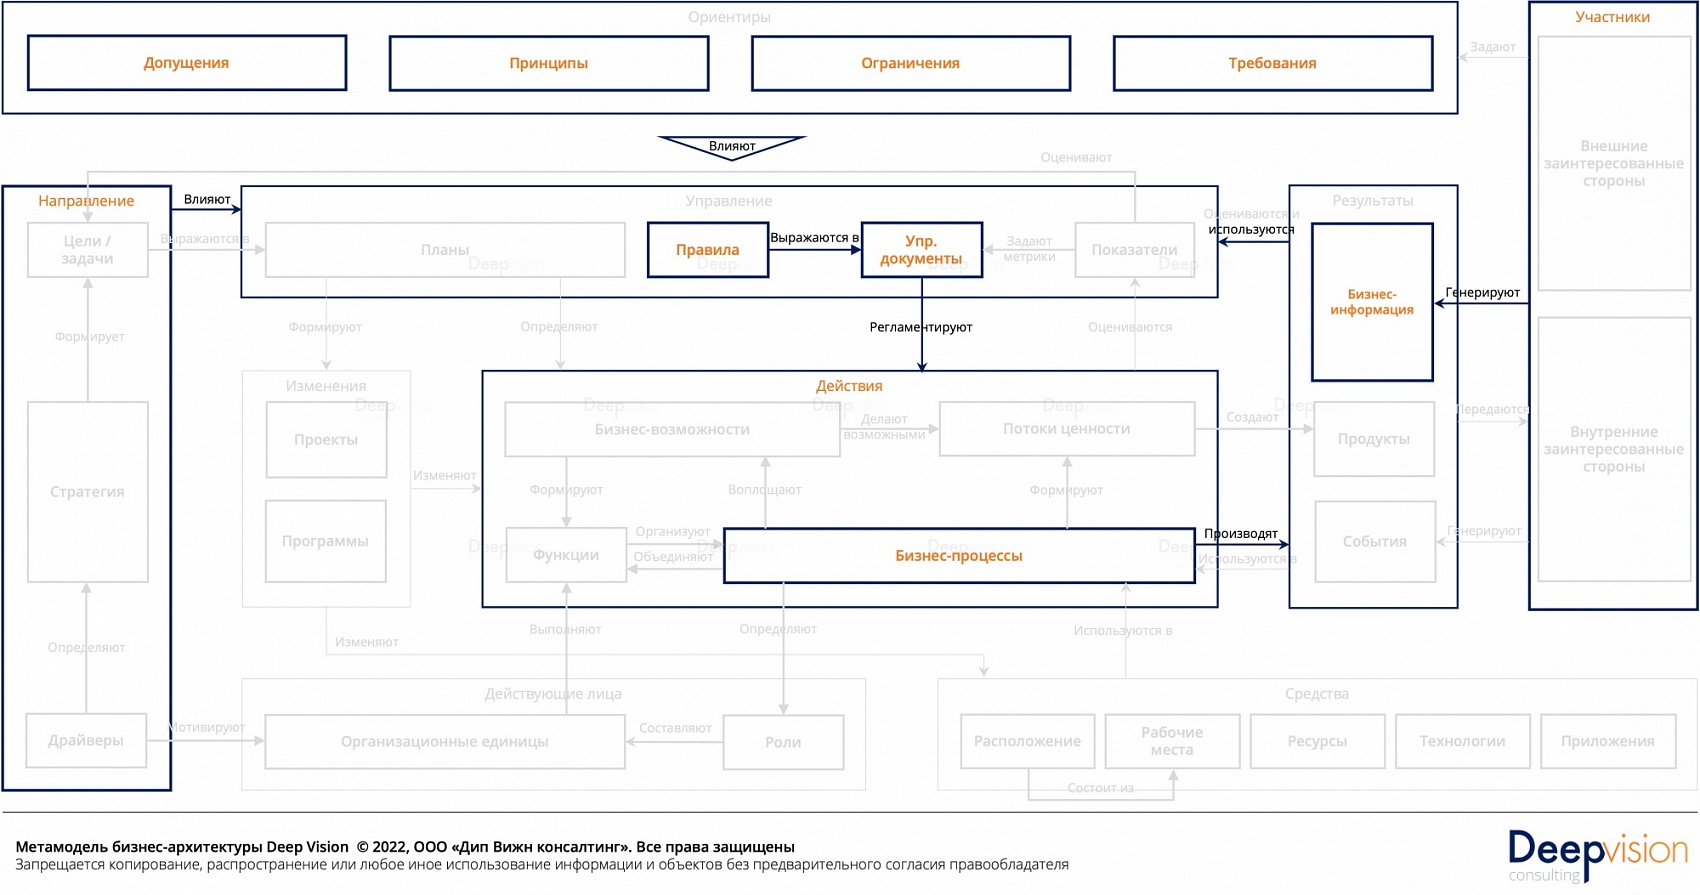 Метамодель бизнес-архитектуры - контур управления.jpg